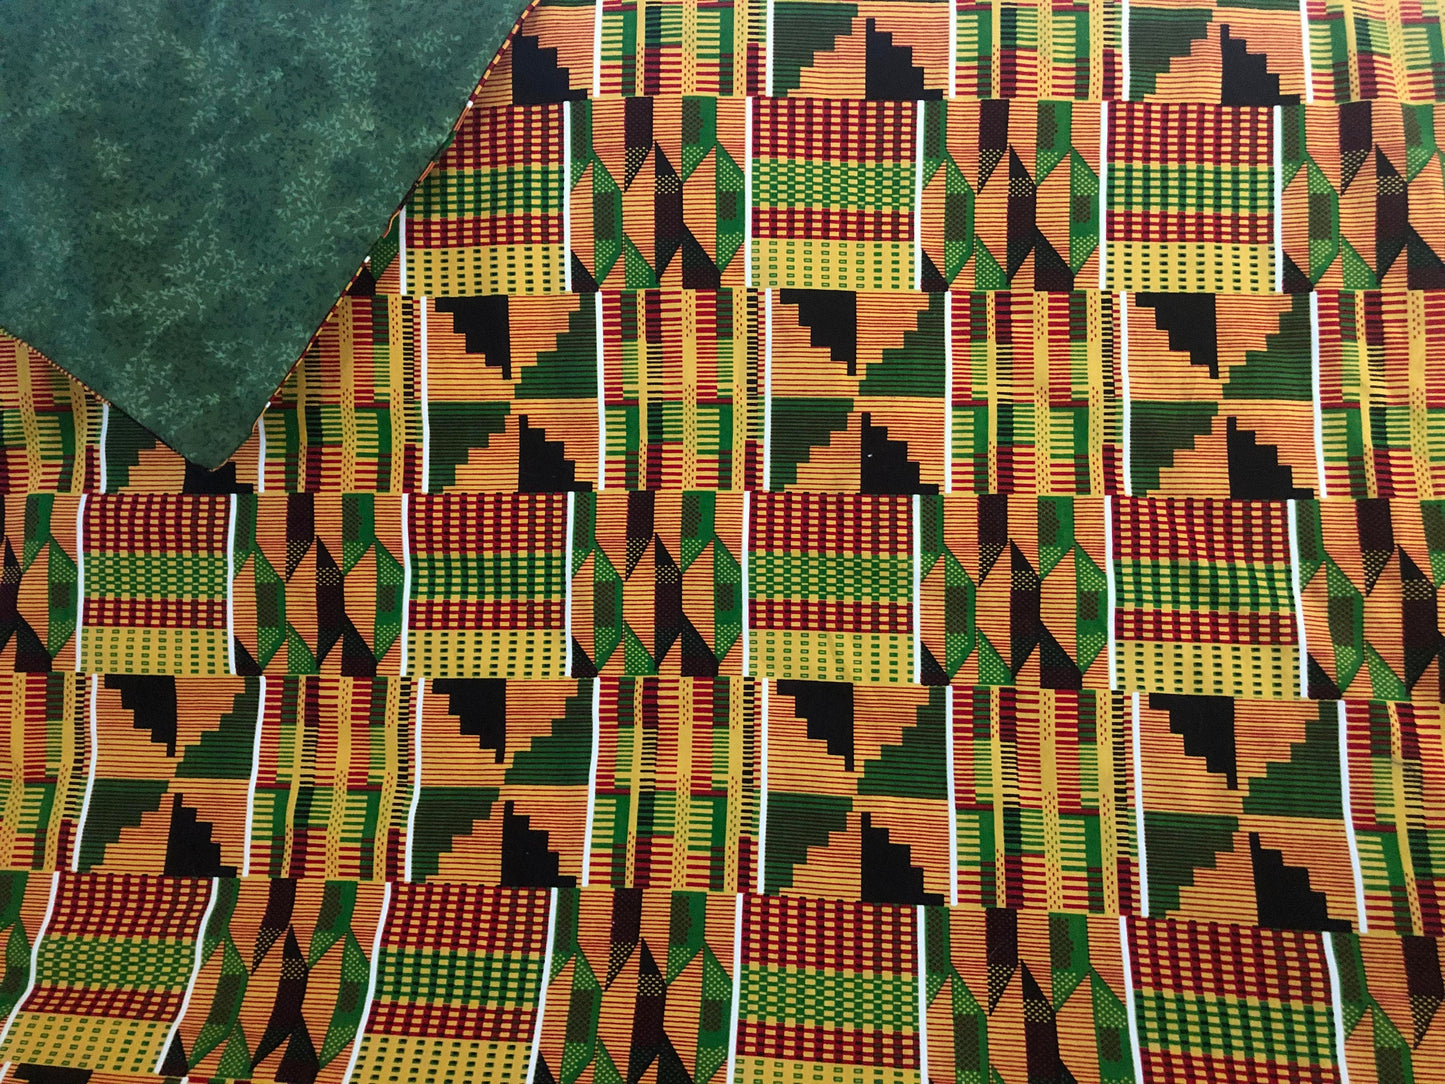 African Kente Cloth Lap Quilt